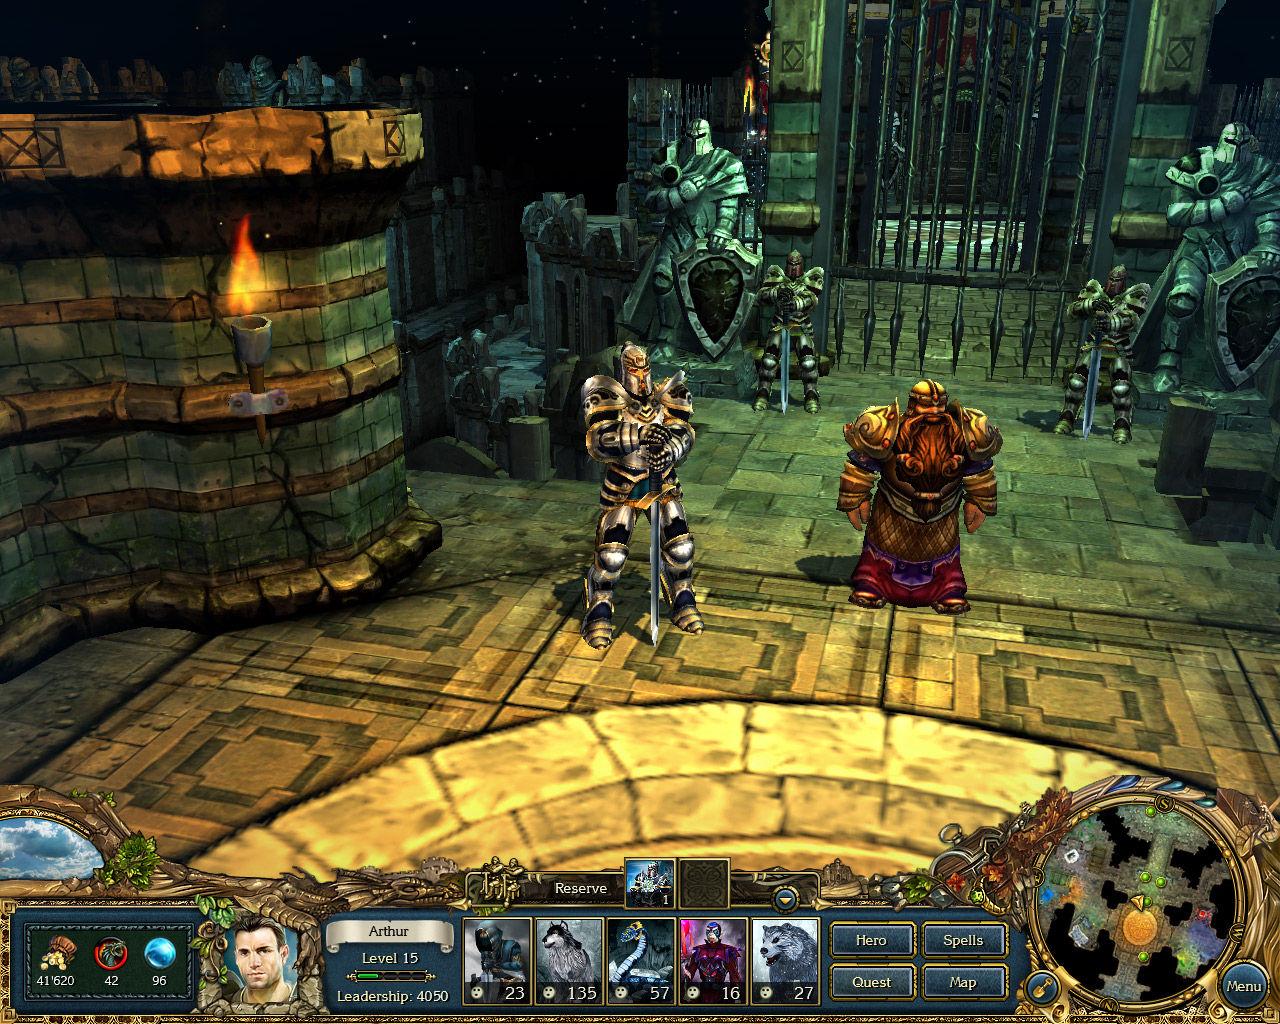 Screenshot №9 from game King's Bounty: Crossworlds